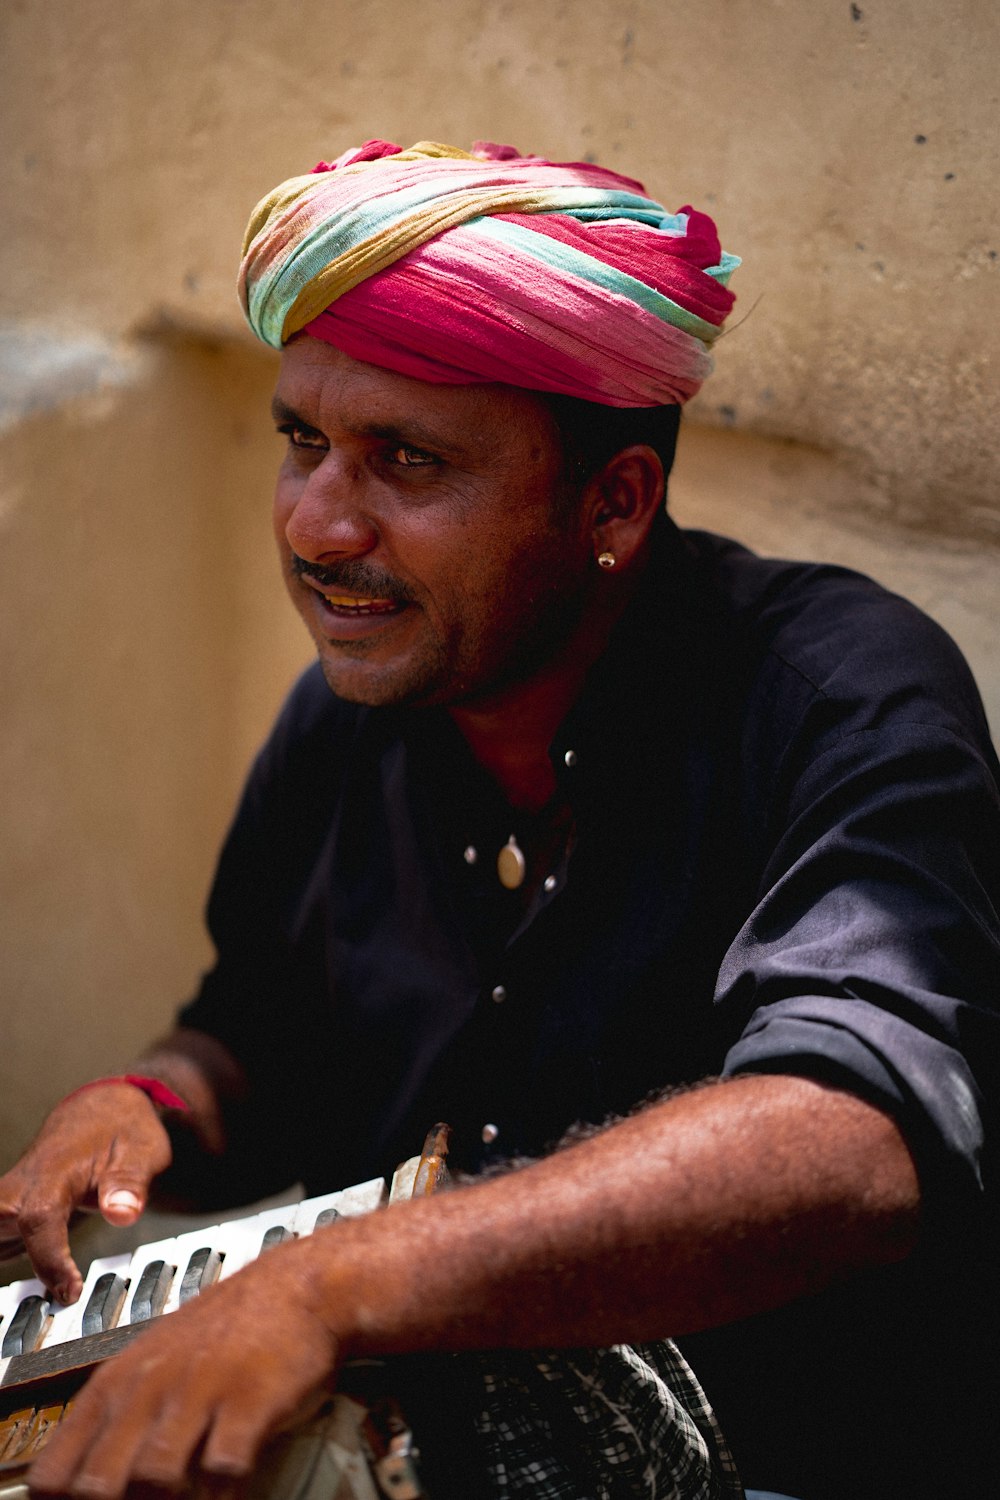 a man in a turban playing a keyboard